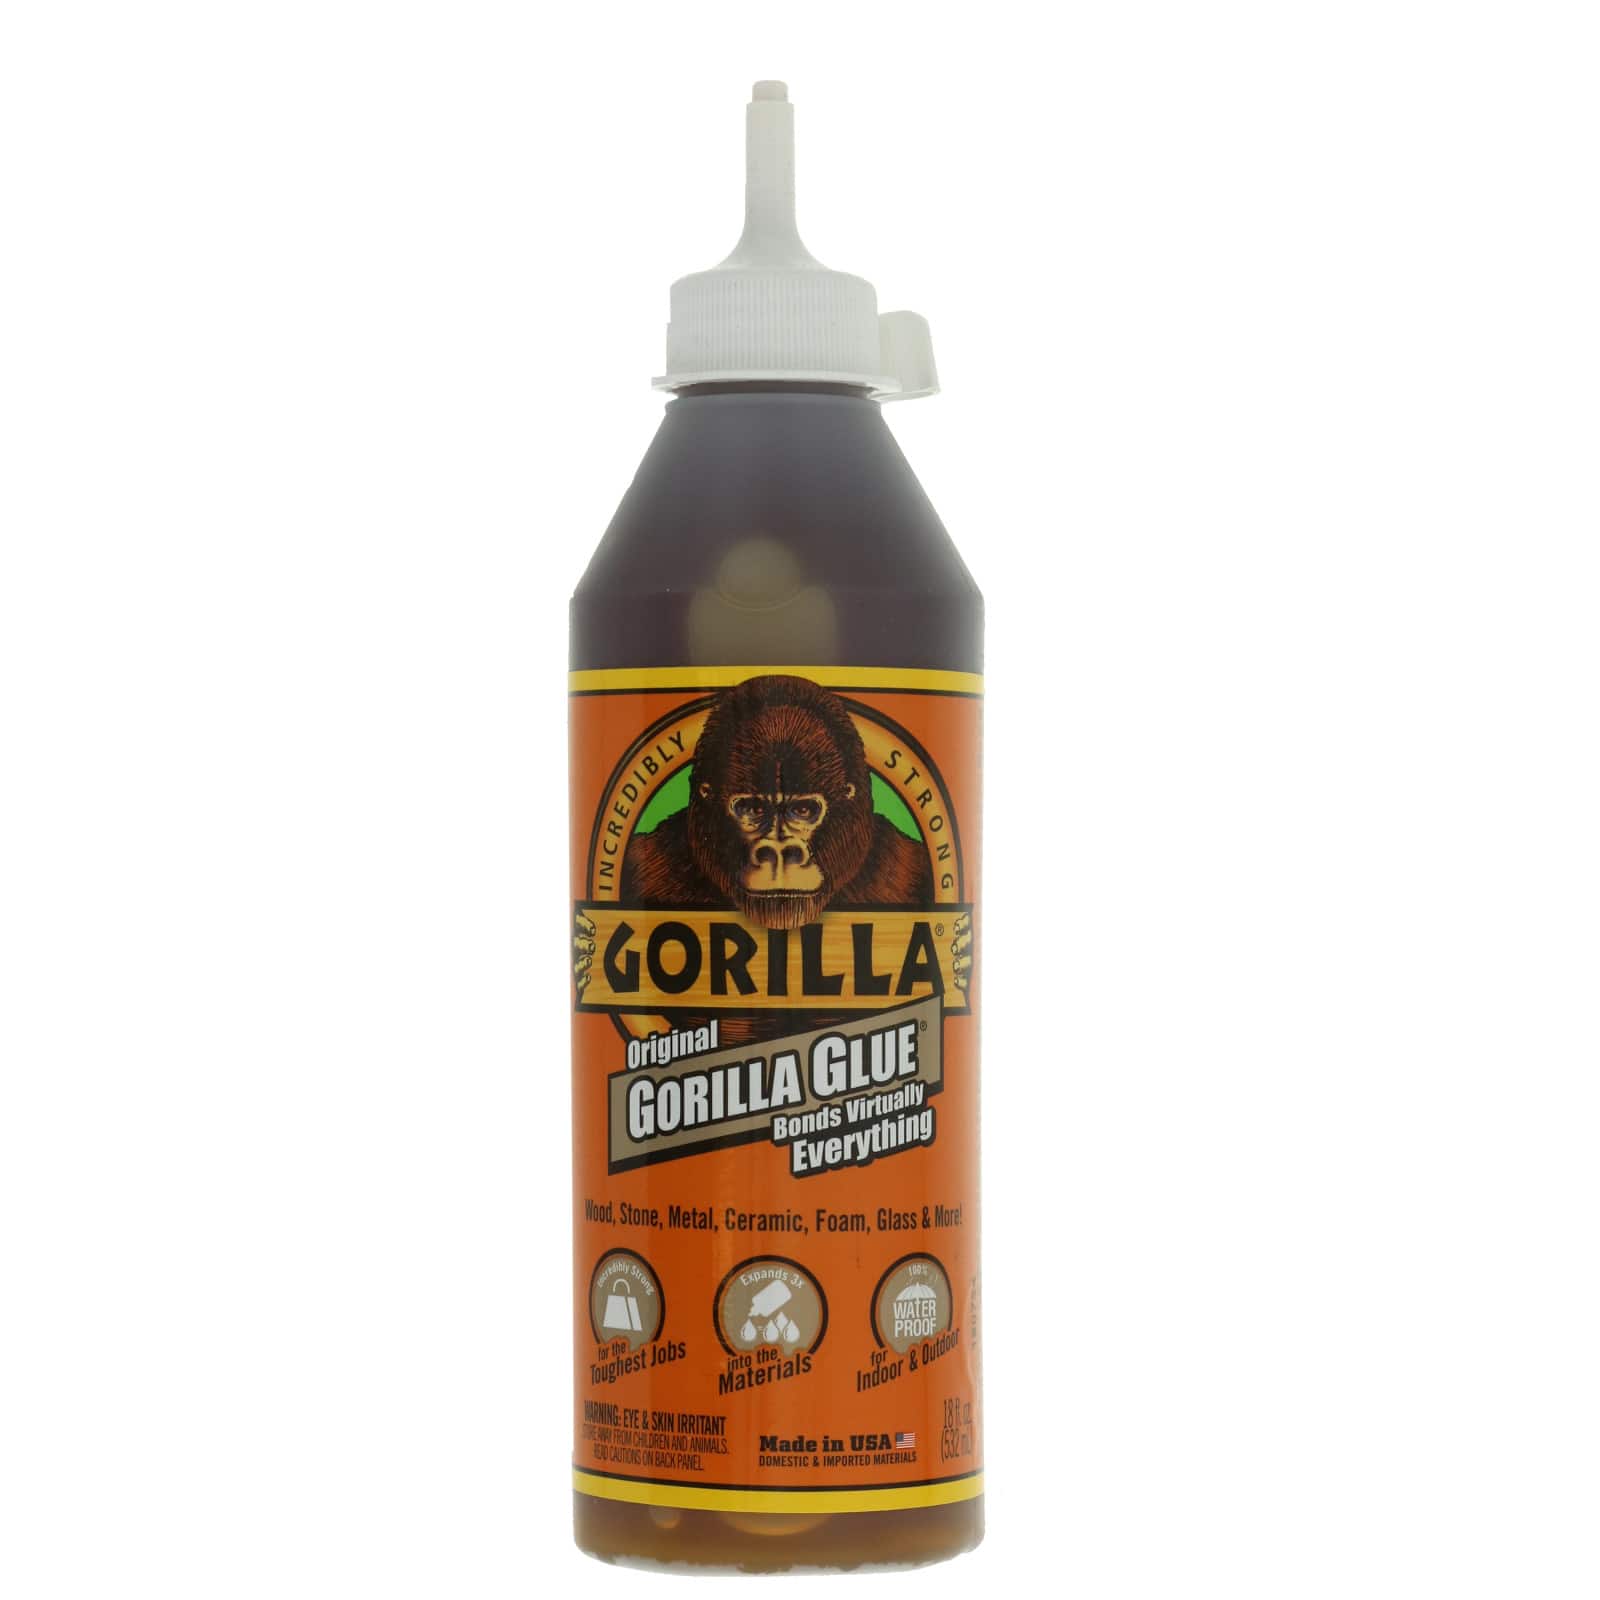 Gorilla Glue (59ml)